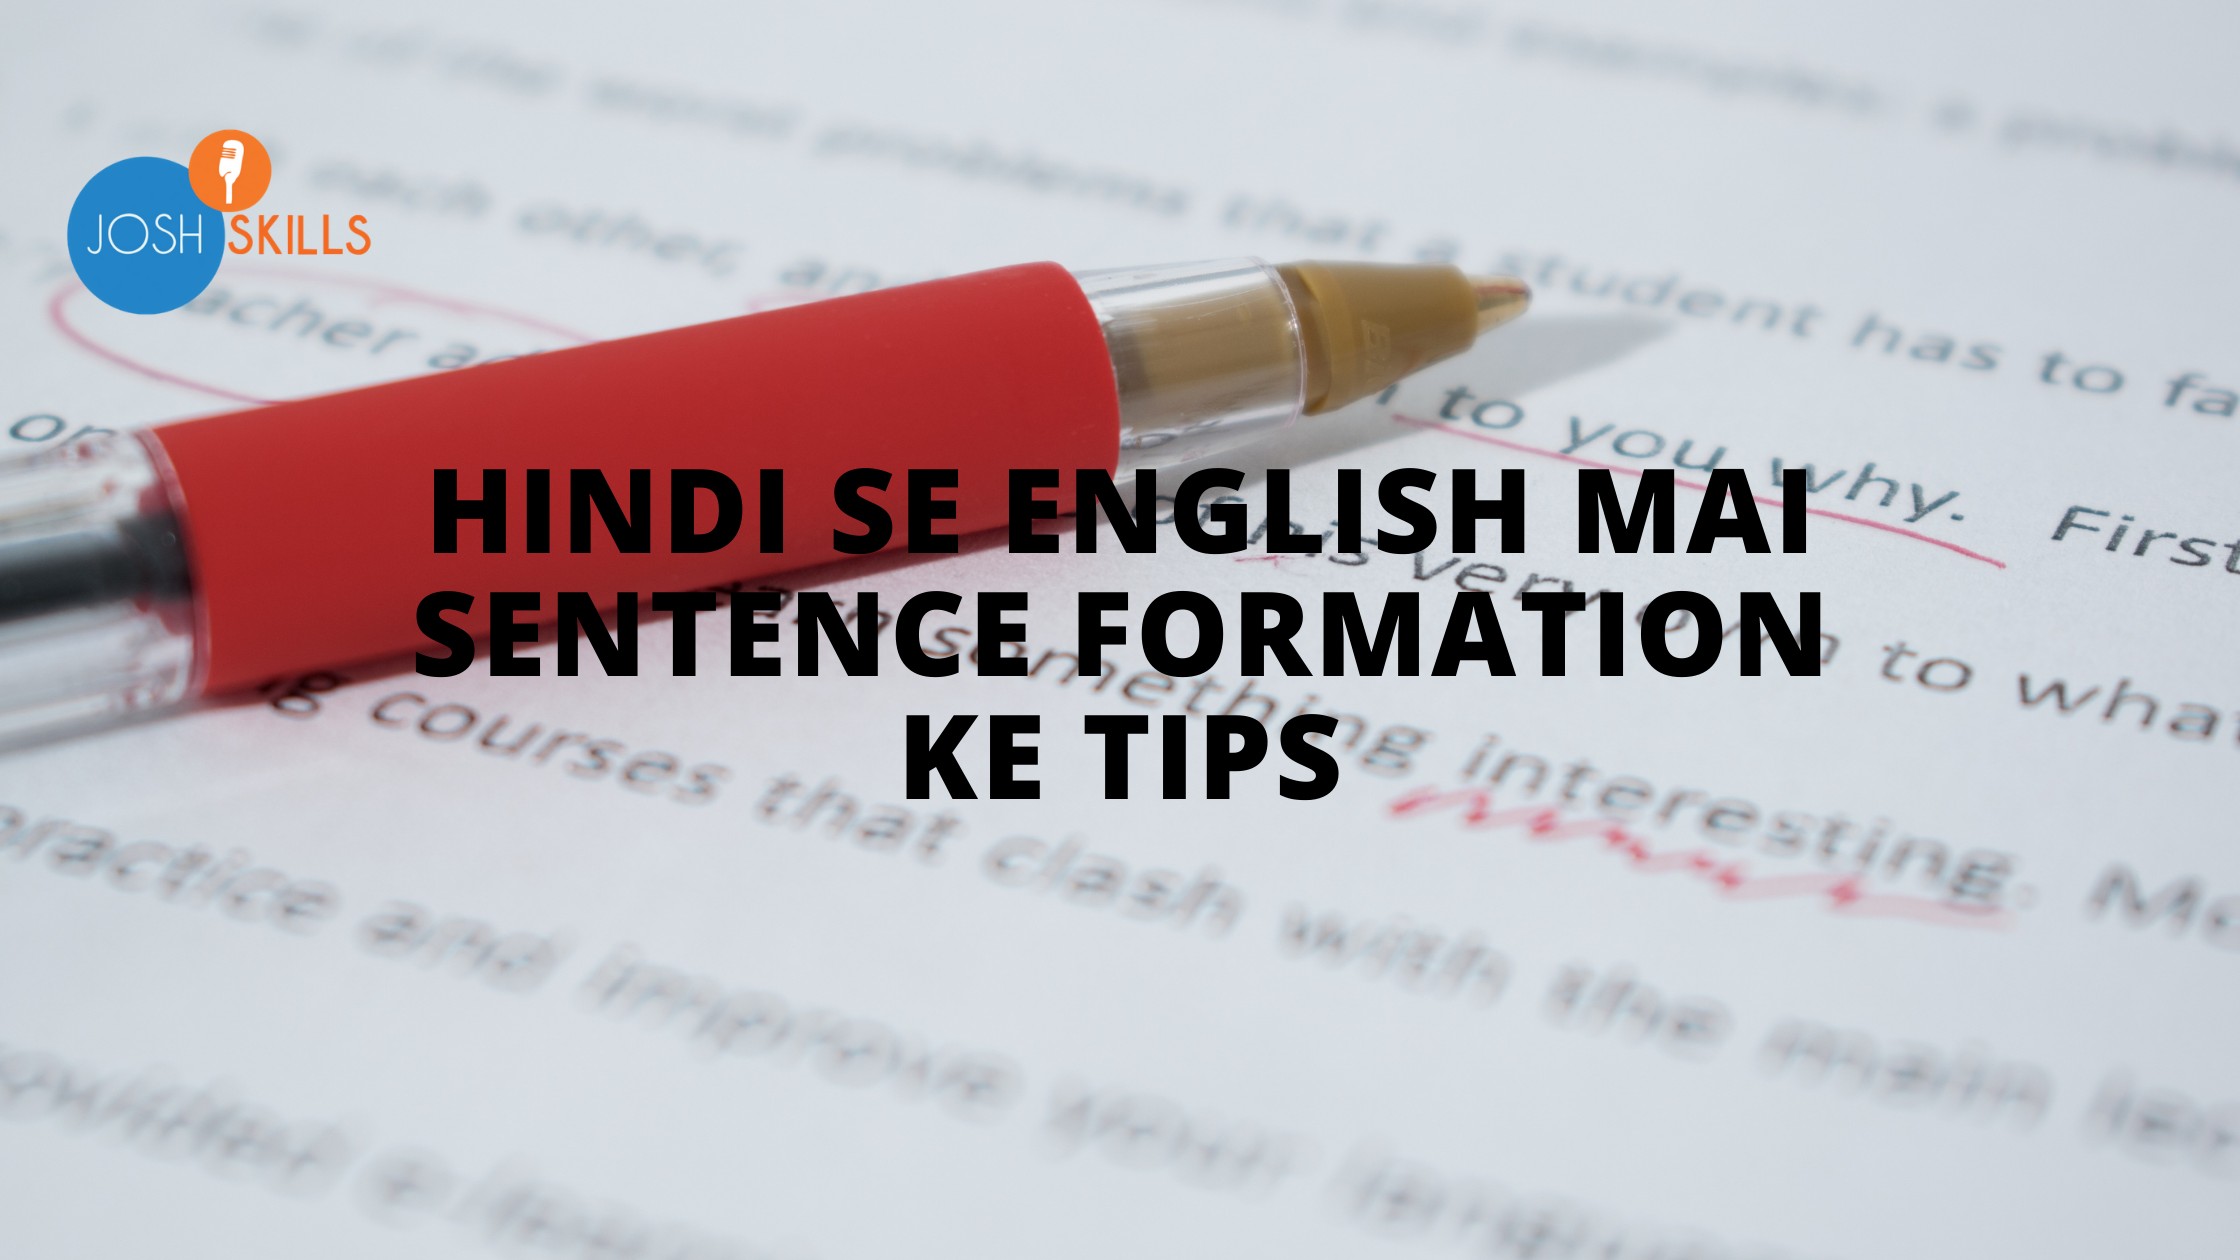 hindi-se-english-mai-sentence-formation-ke-tips-josh